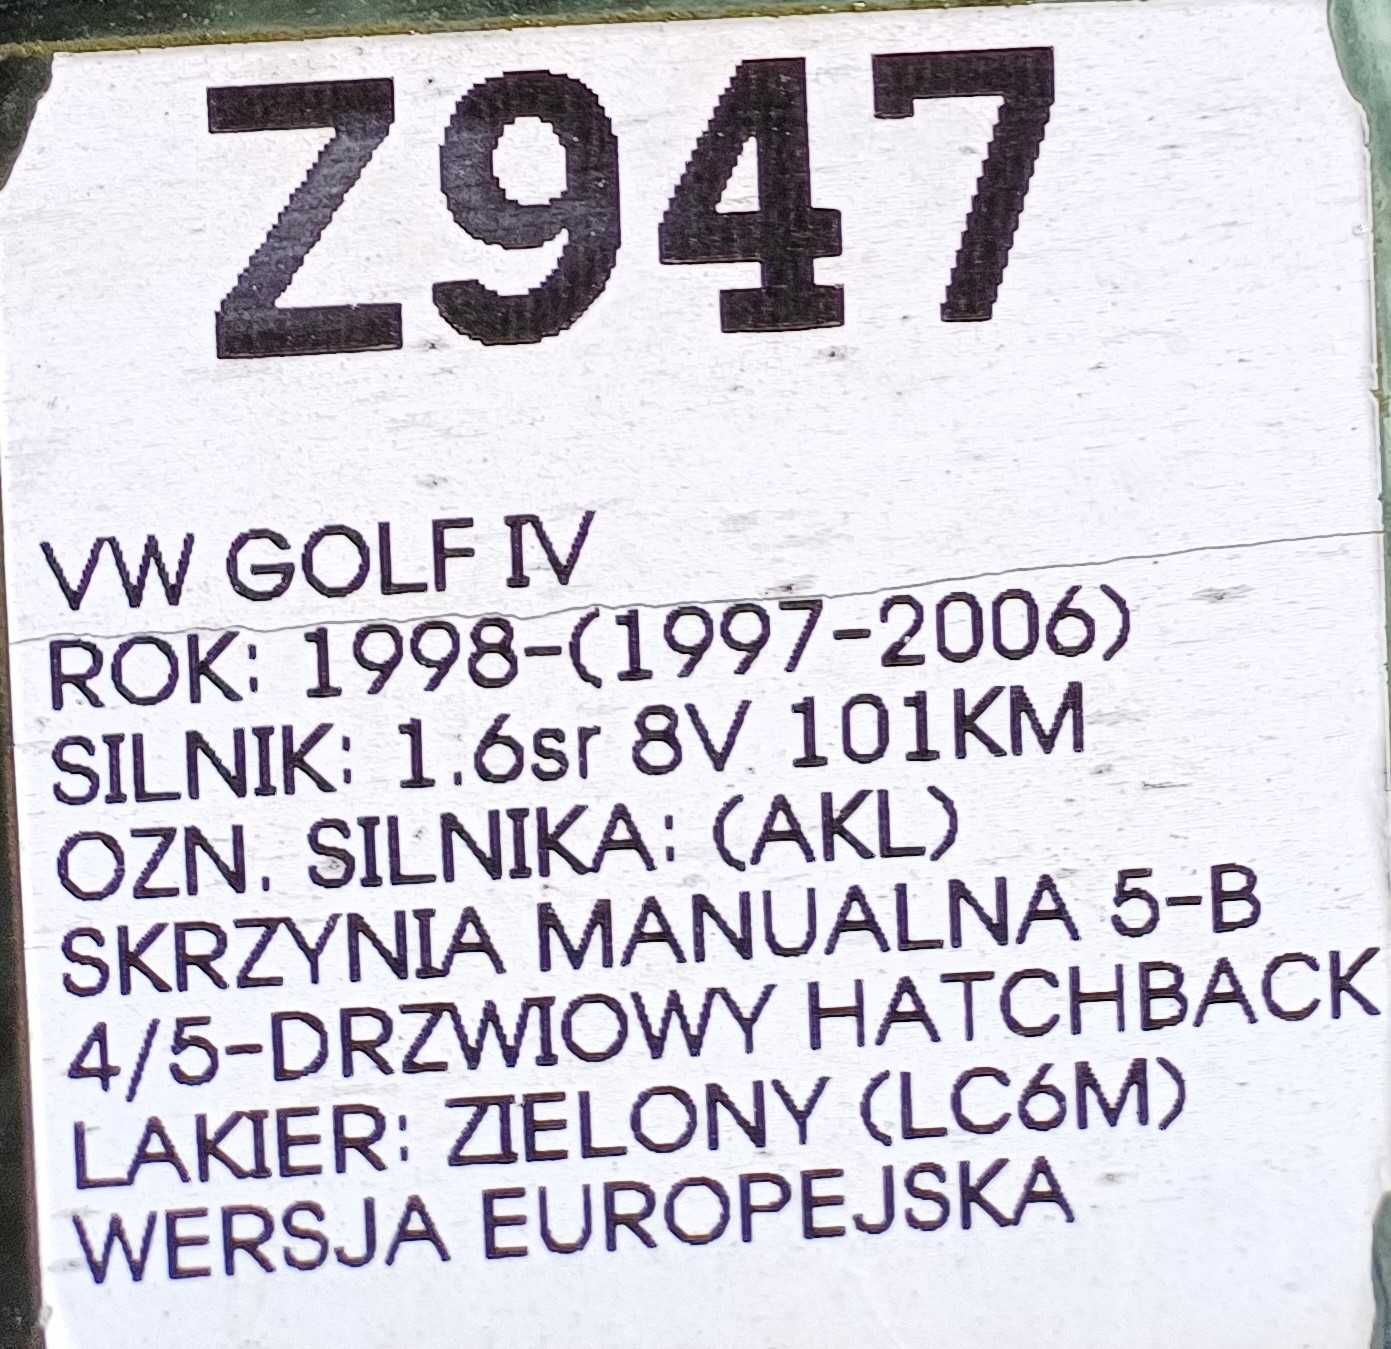 Maska volkswagen golf IV LC6M